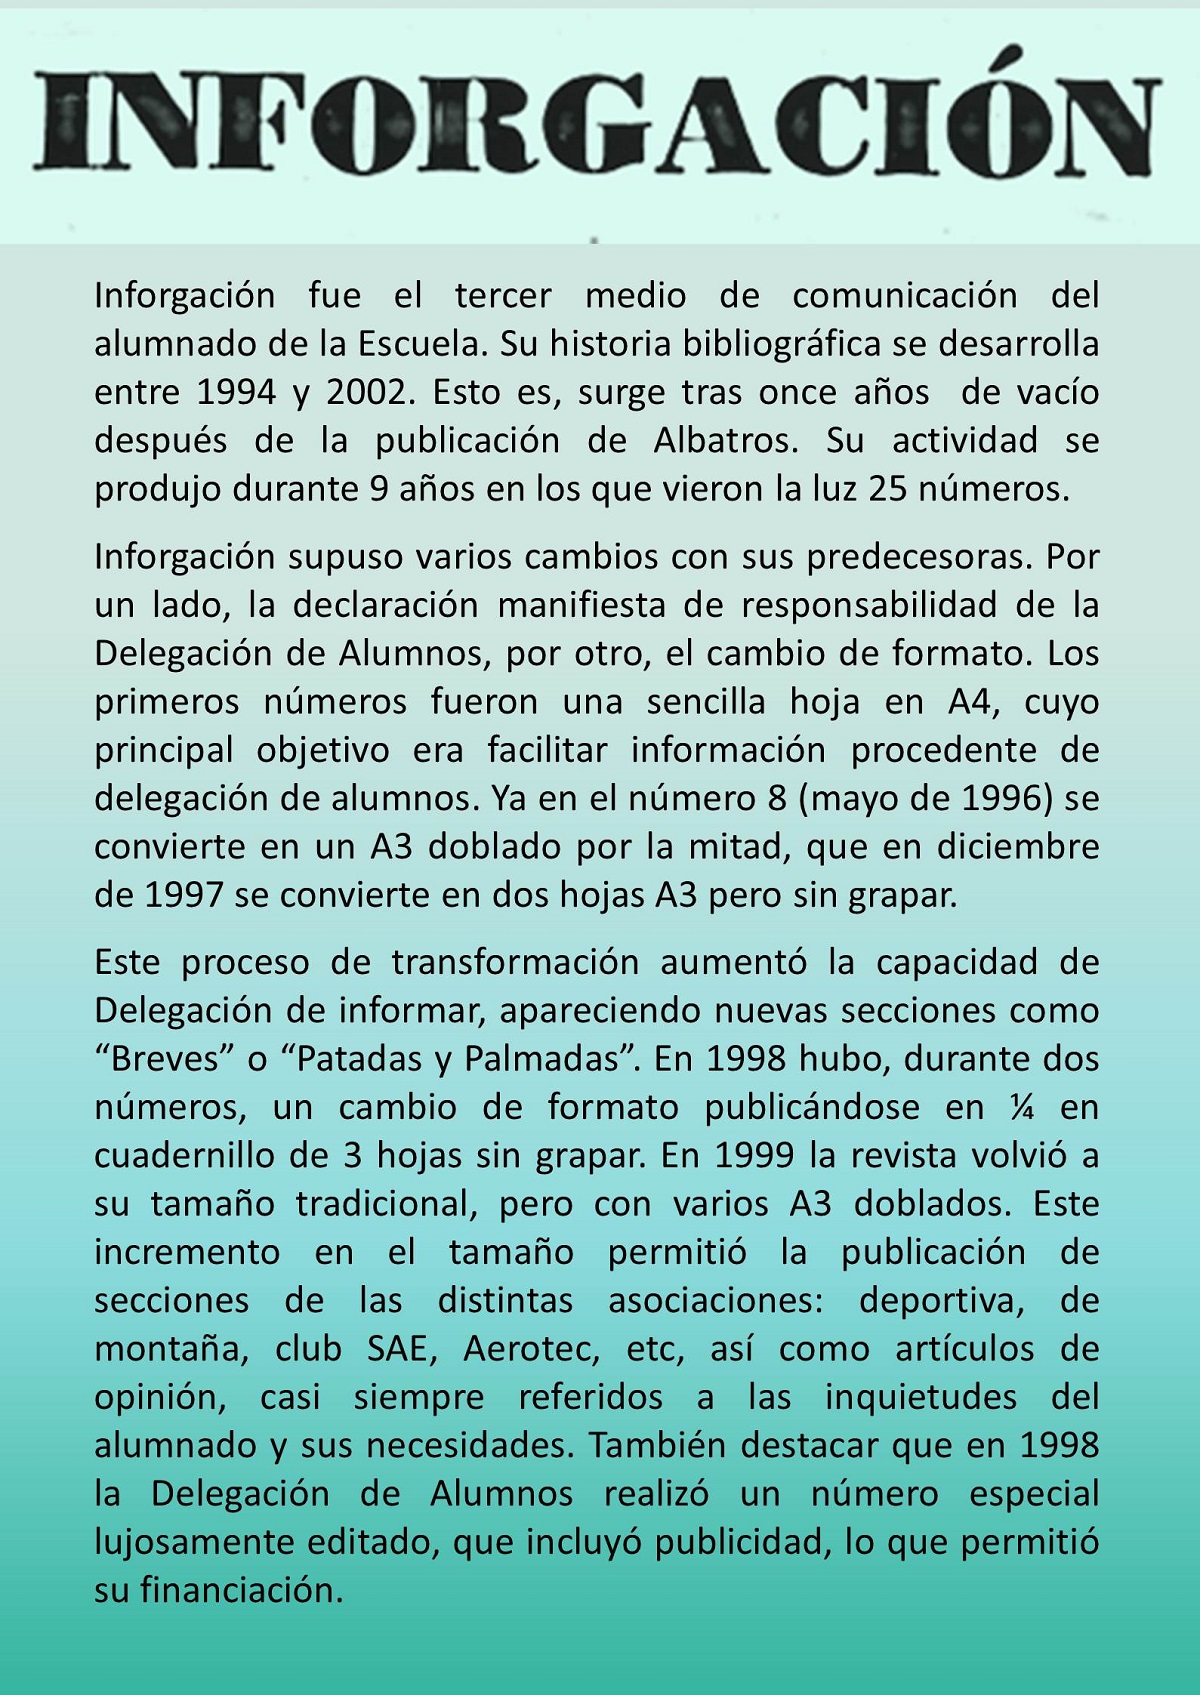 Historia de la Revista Inforgacion